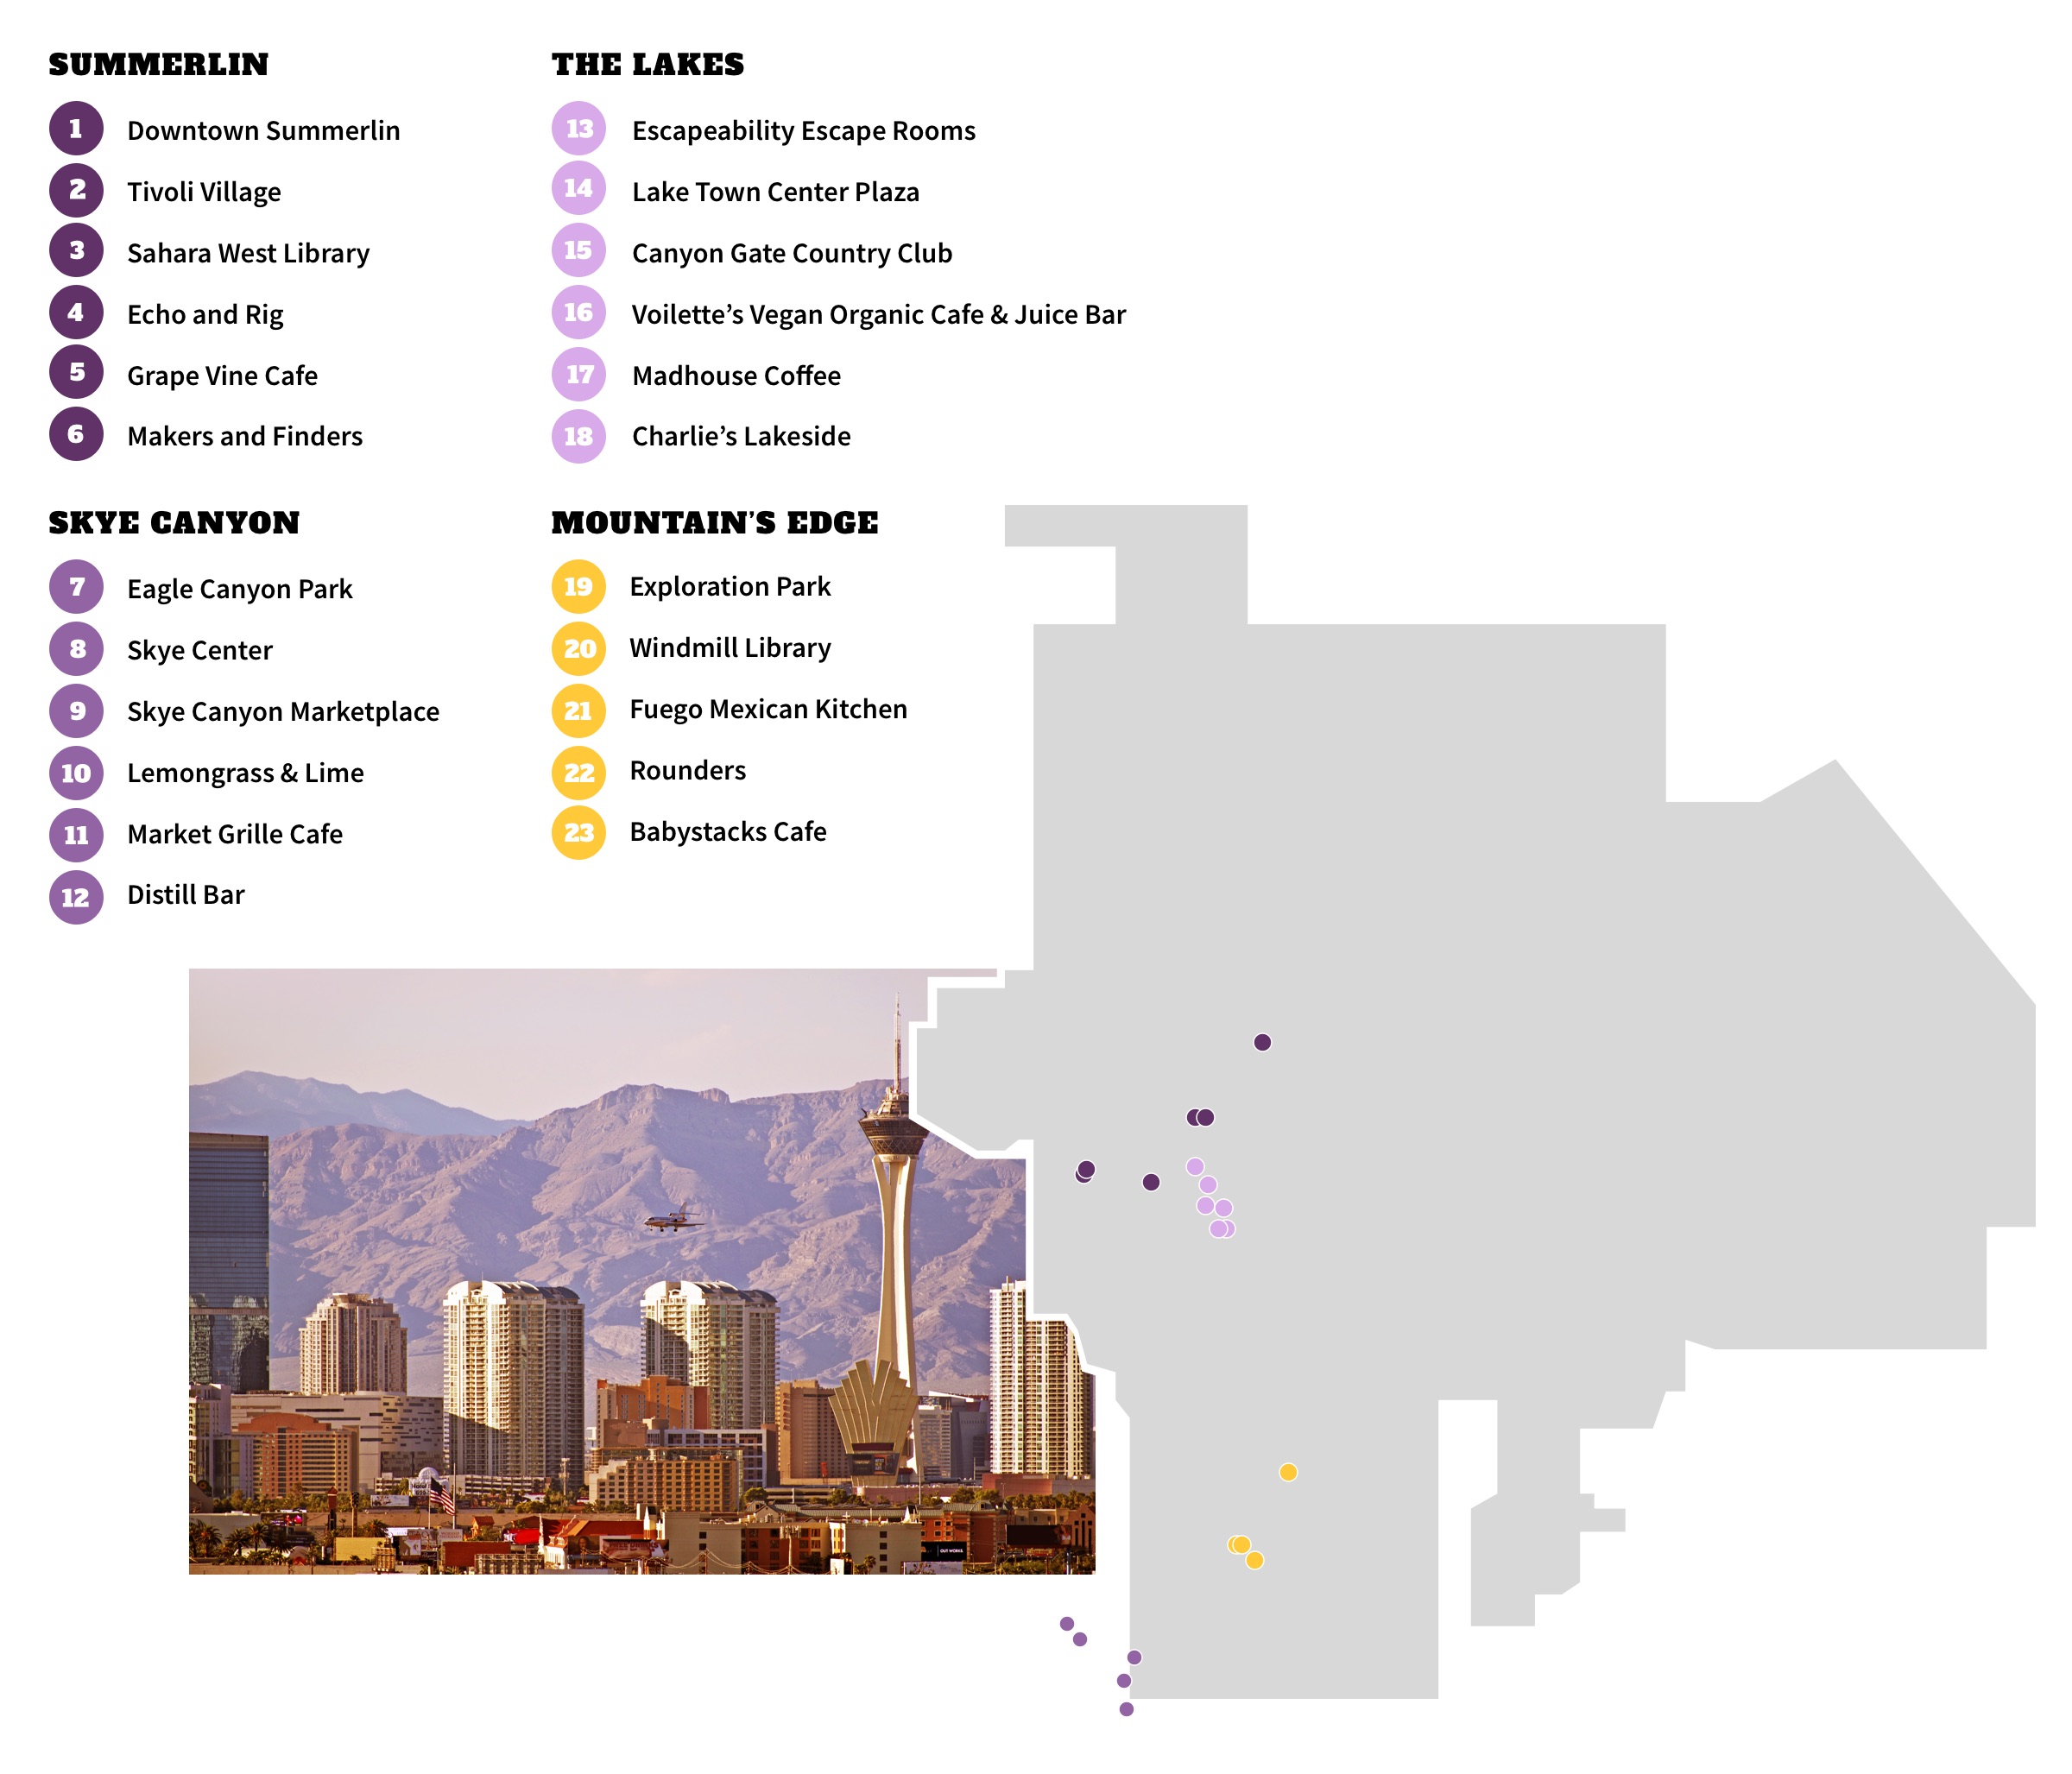 Las Vegas Neighborhood Map